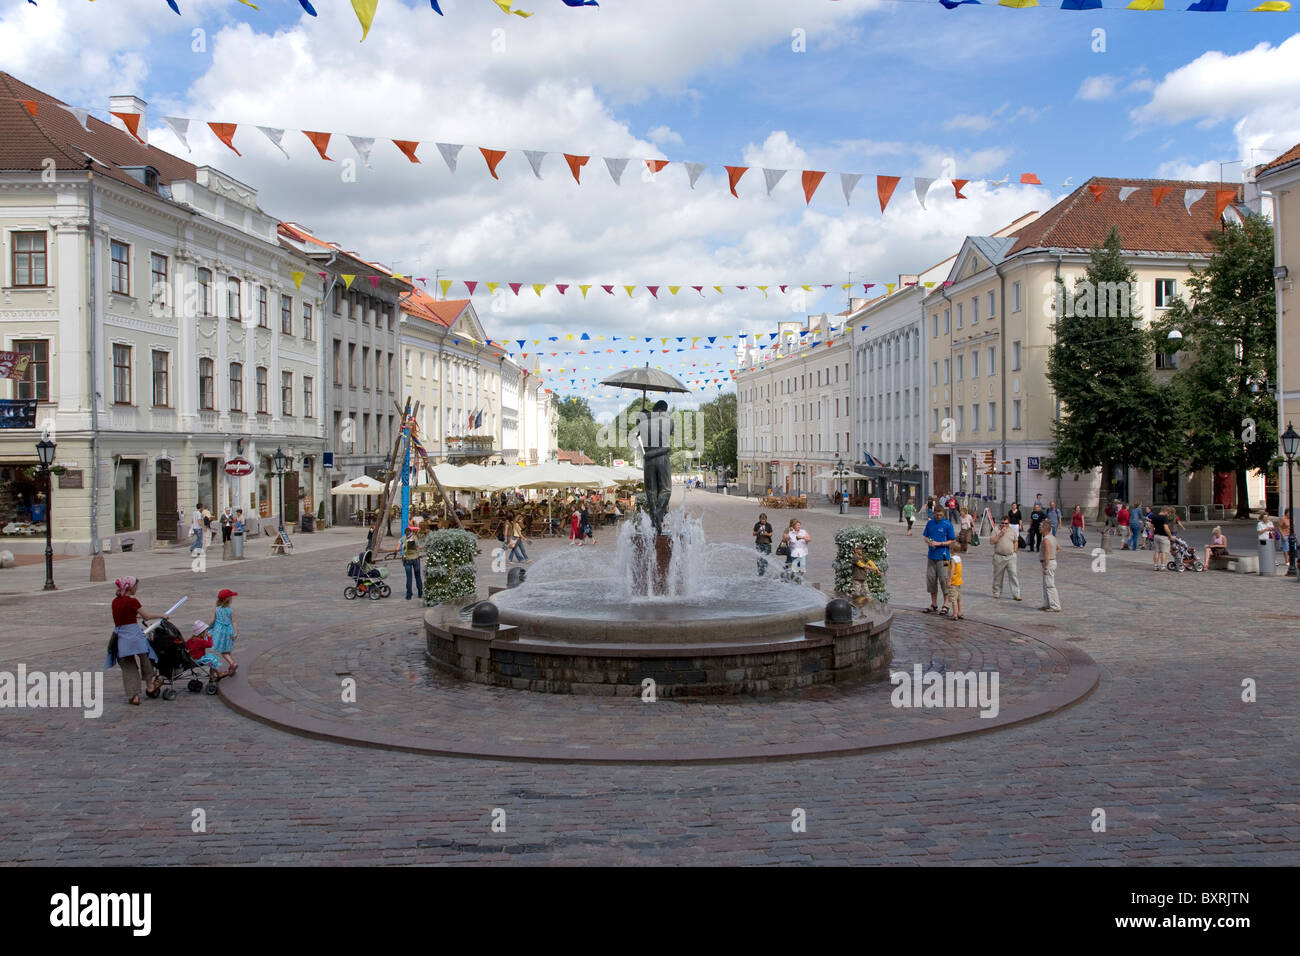 Estonia, Tartu, Statue and fountain on Town Hall Square Stock Photo